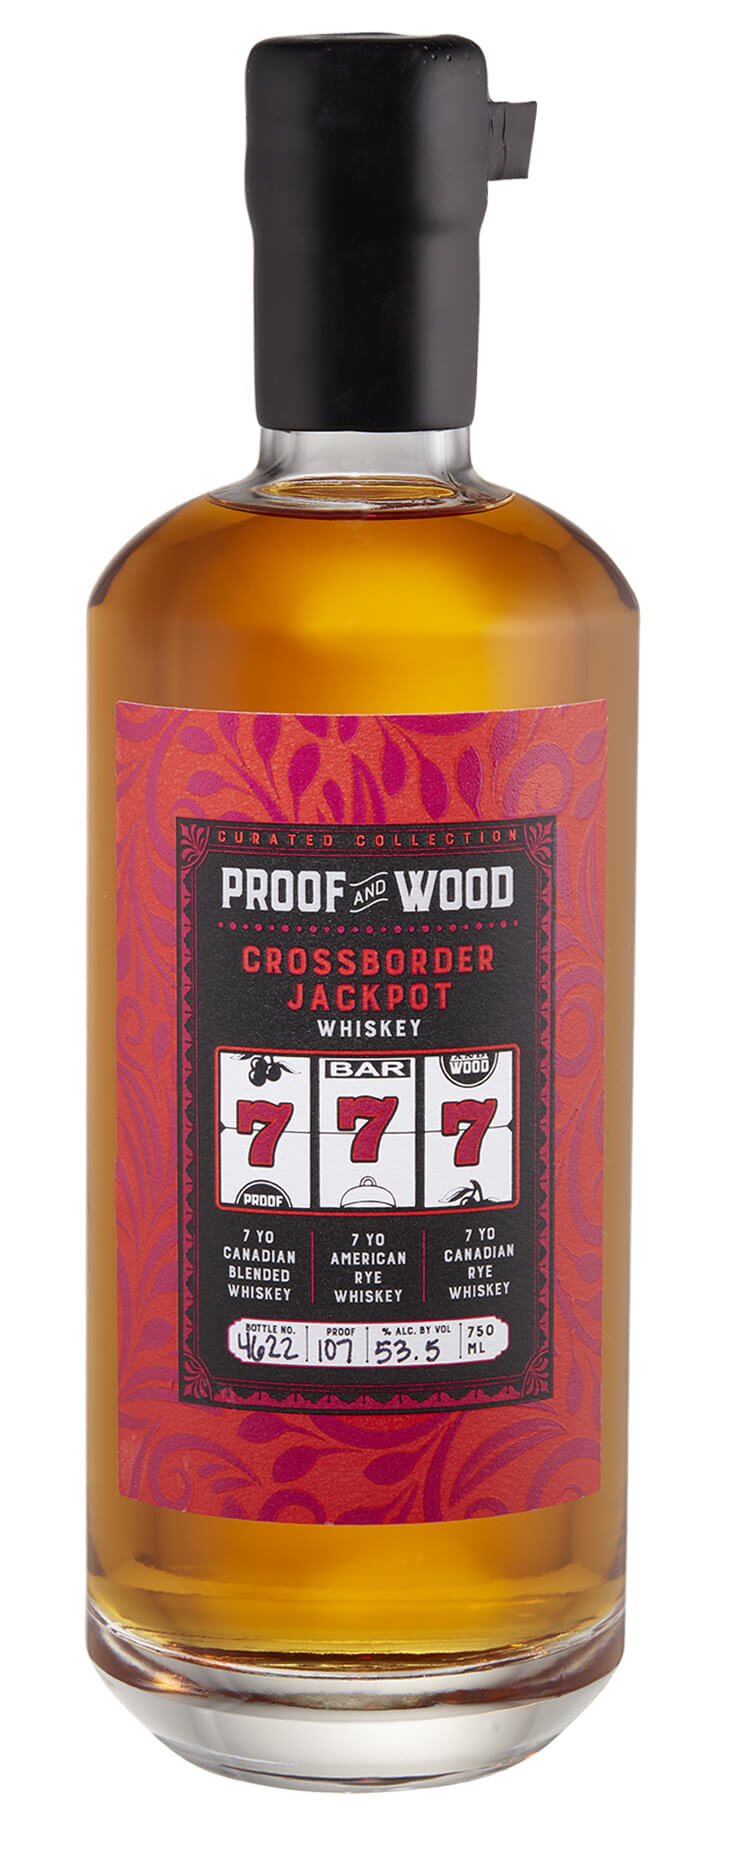 Proof and Wood Crossborder Jackpot Whiskey